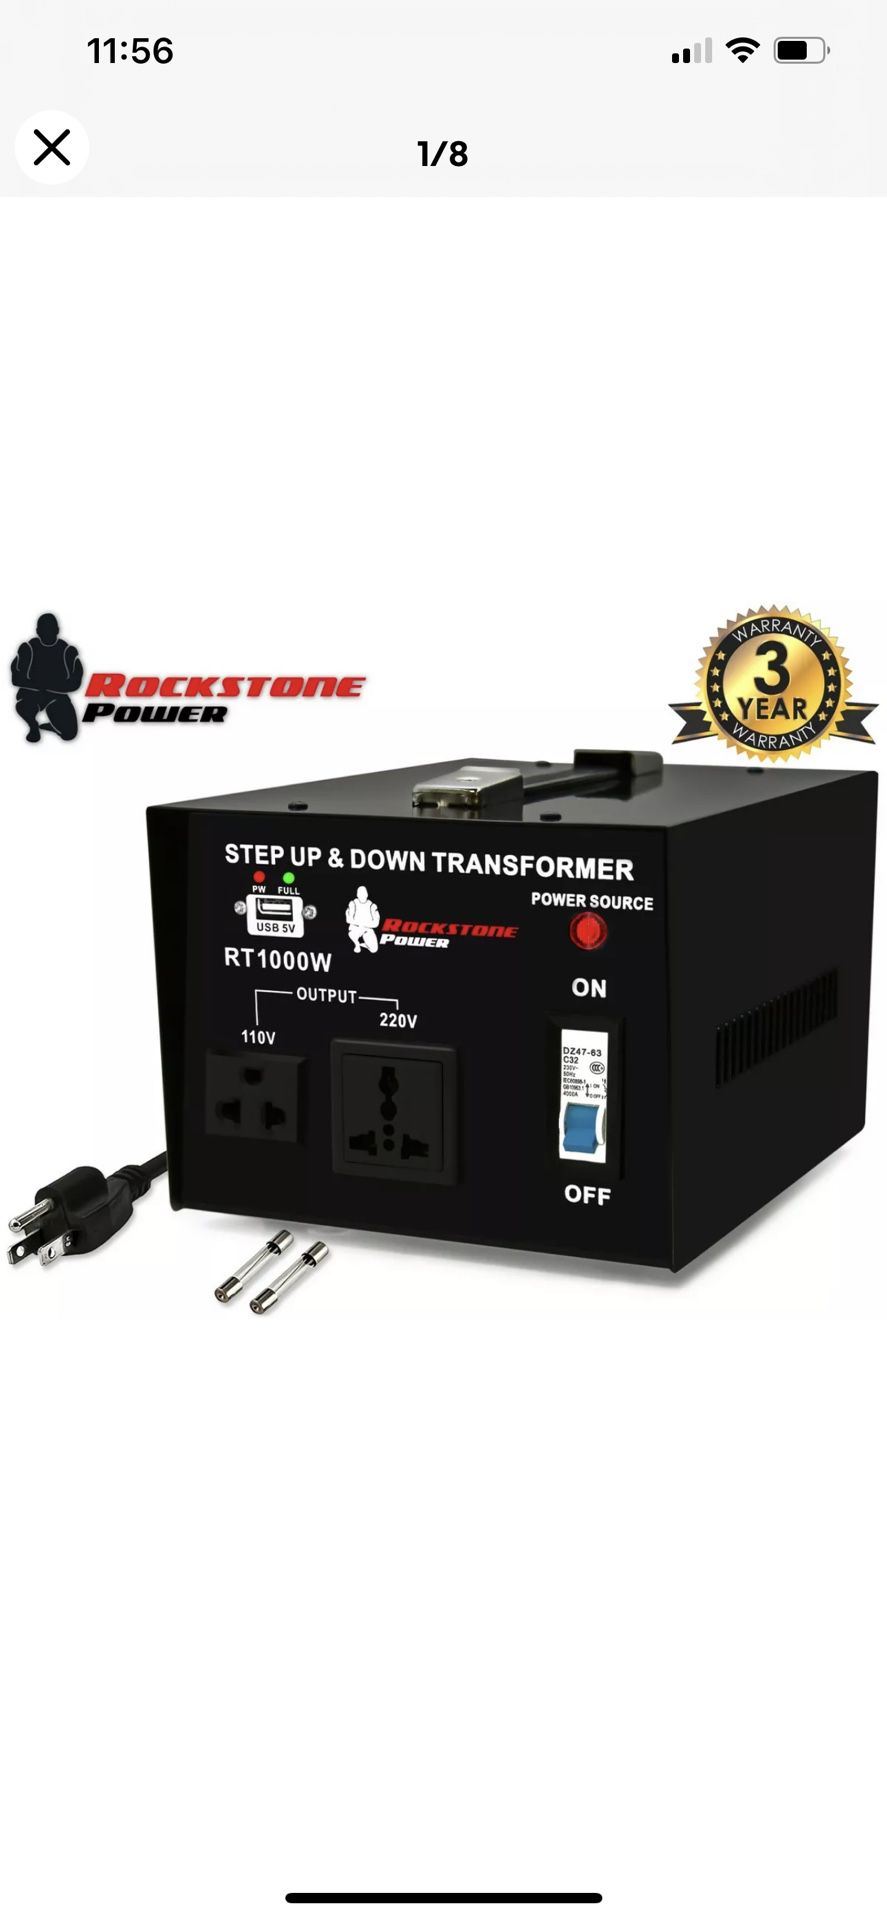 Rockstone Power 1000 Watt Voltage Converter Transformer - Heavy Duty Step Up/Down AC 110V/120V/220V/240V Power Converter - Circuit Breaker Protection